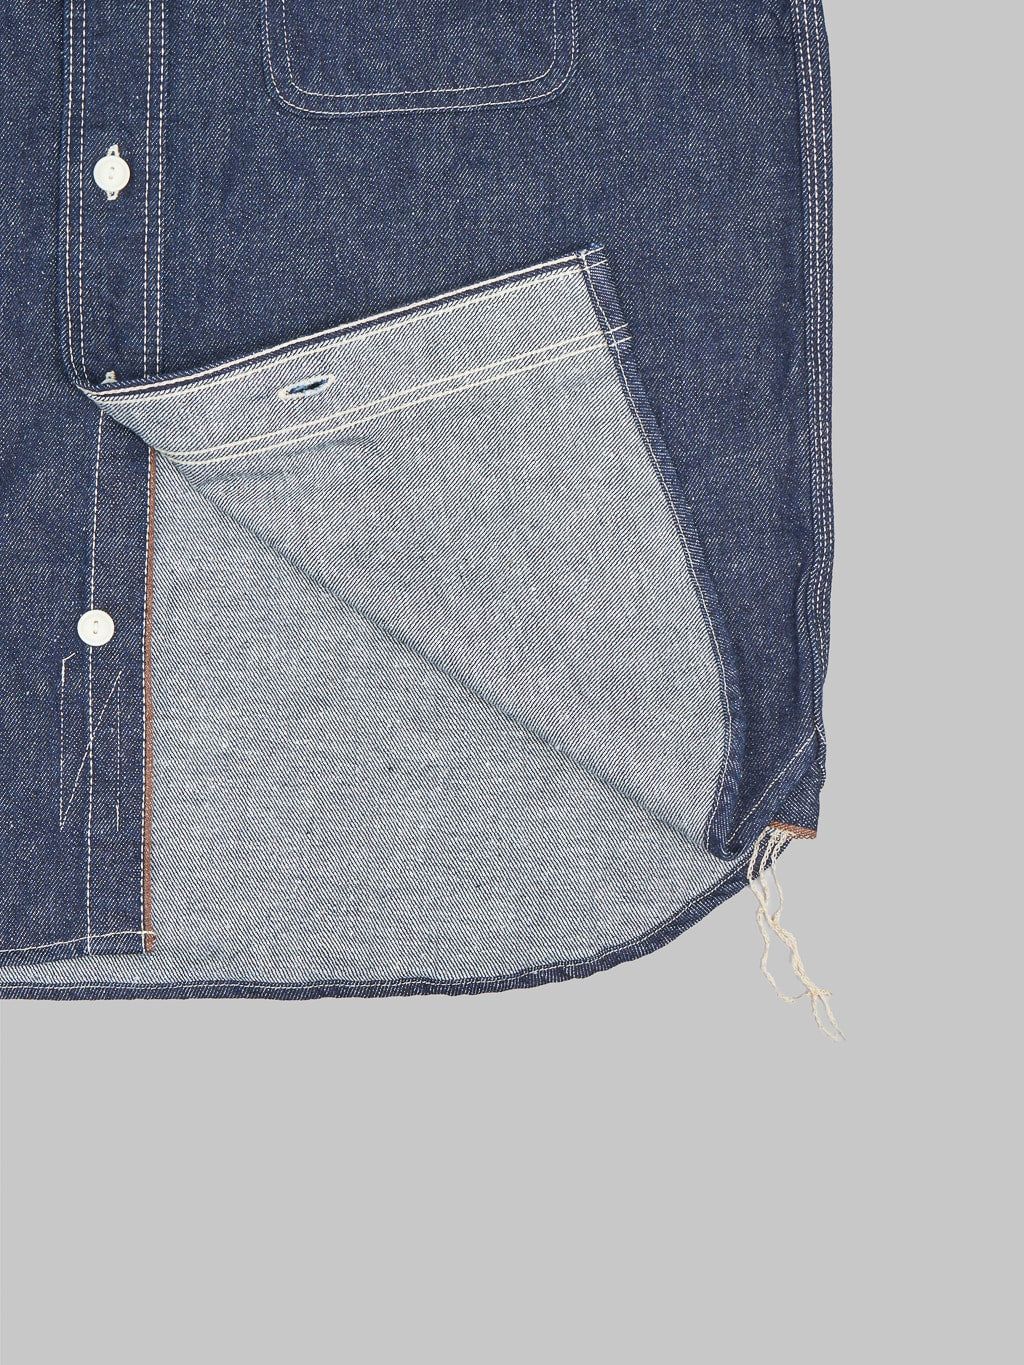 Samurai Jeans SJWS-SC01W 10oz Denim Work Shirt